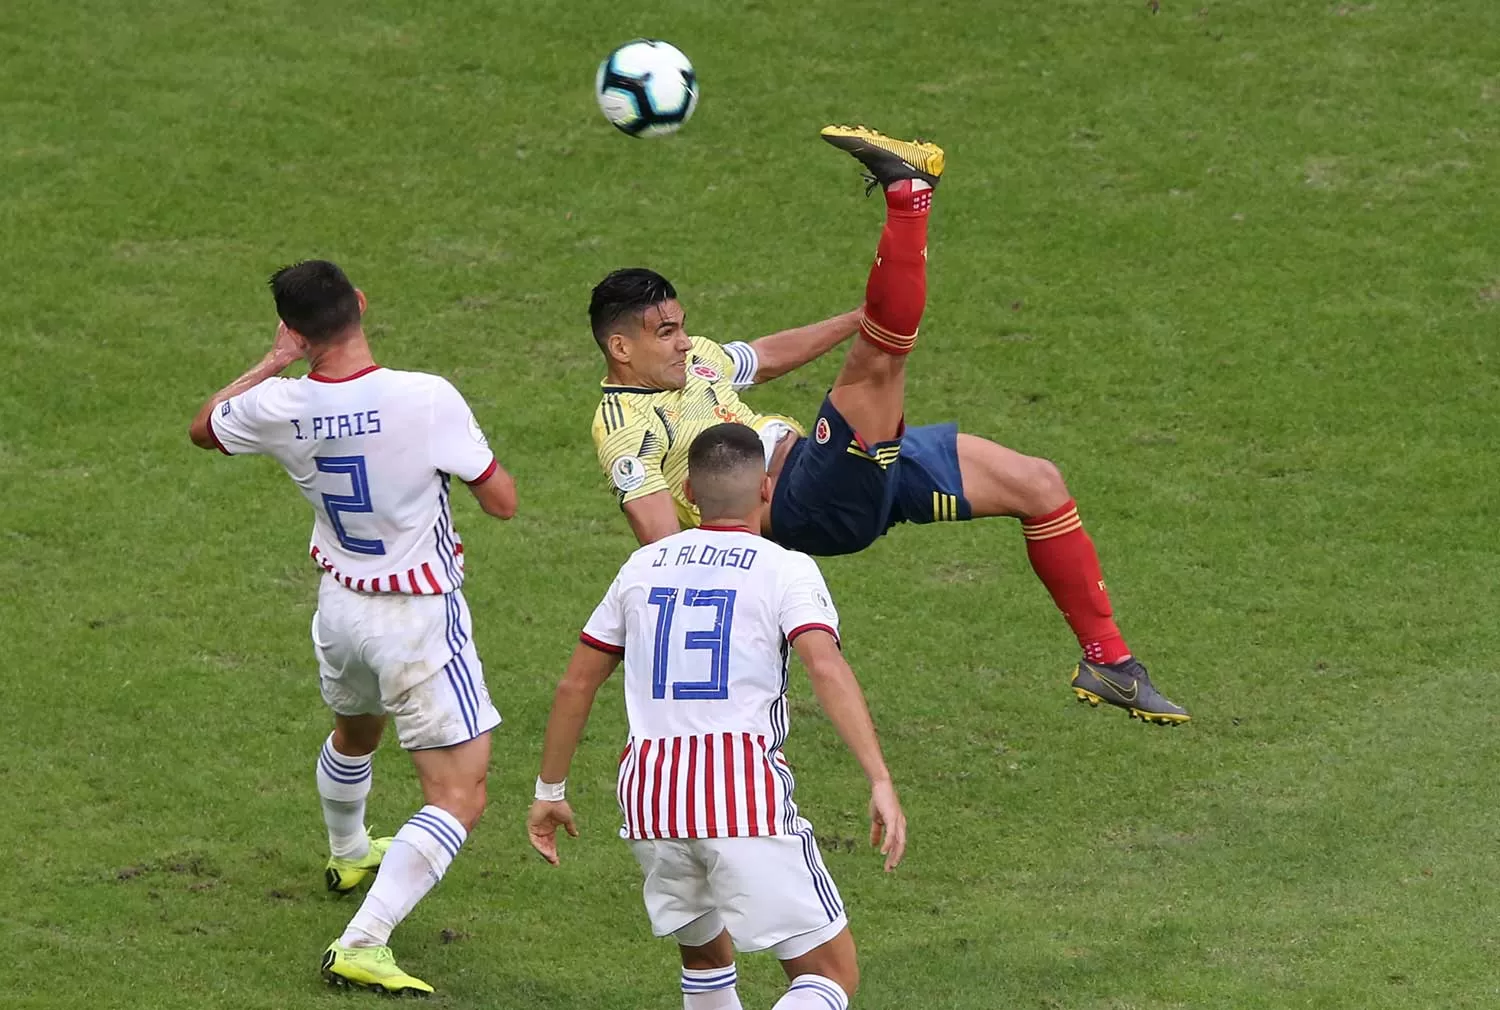 PIRUETA. Falcao domina la pelota en el aire ante Paraguay.